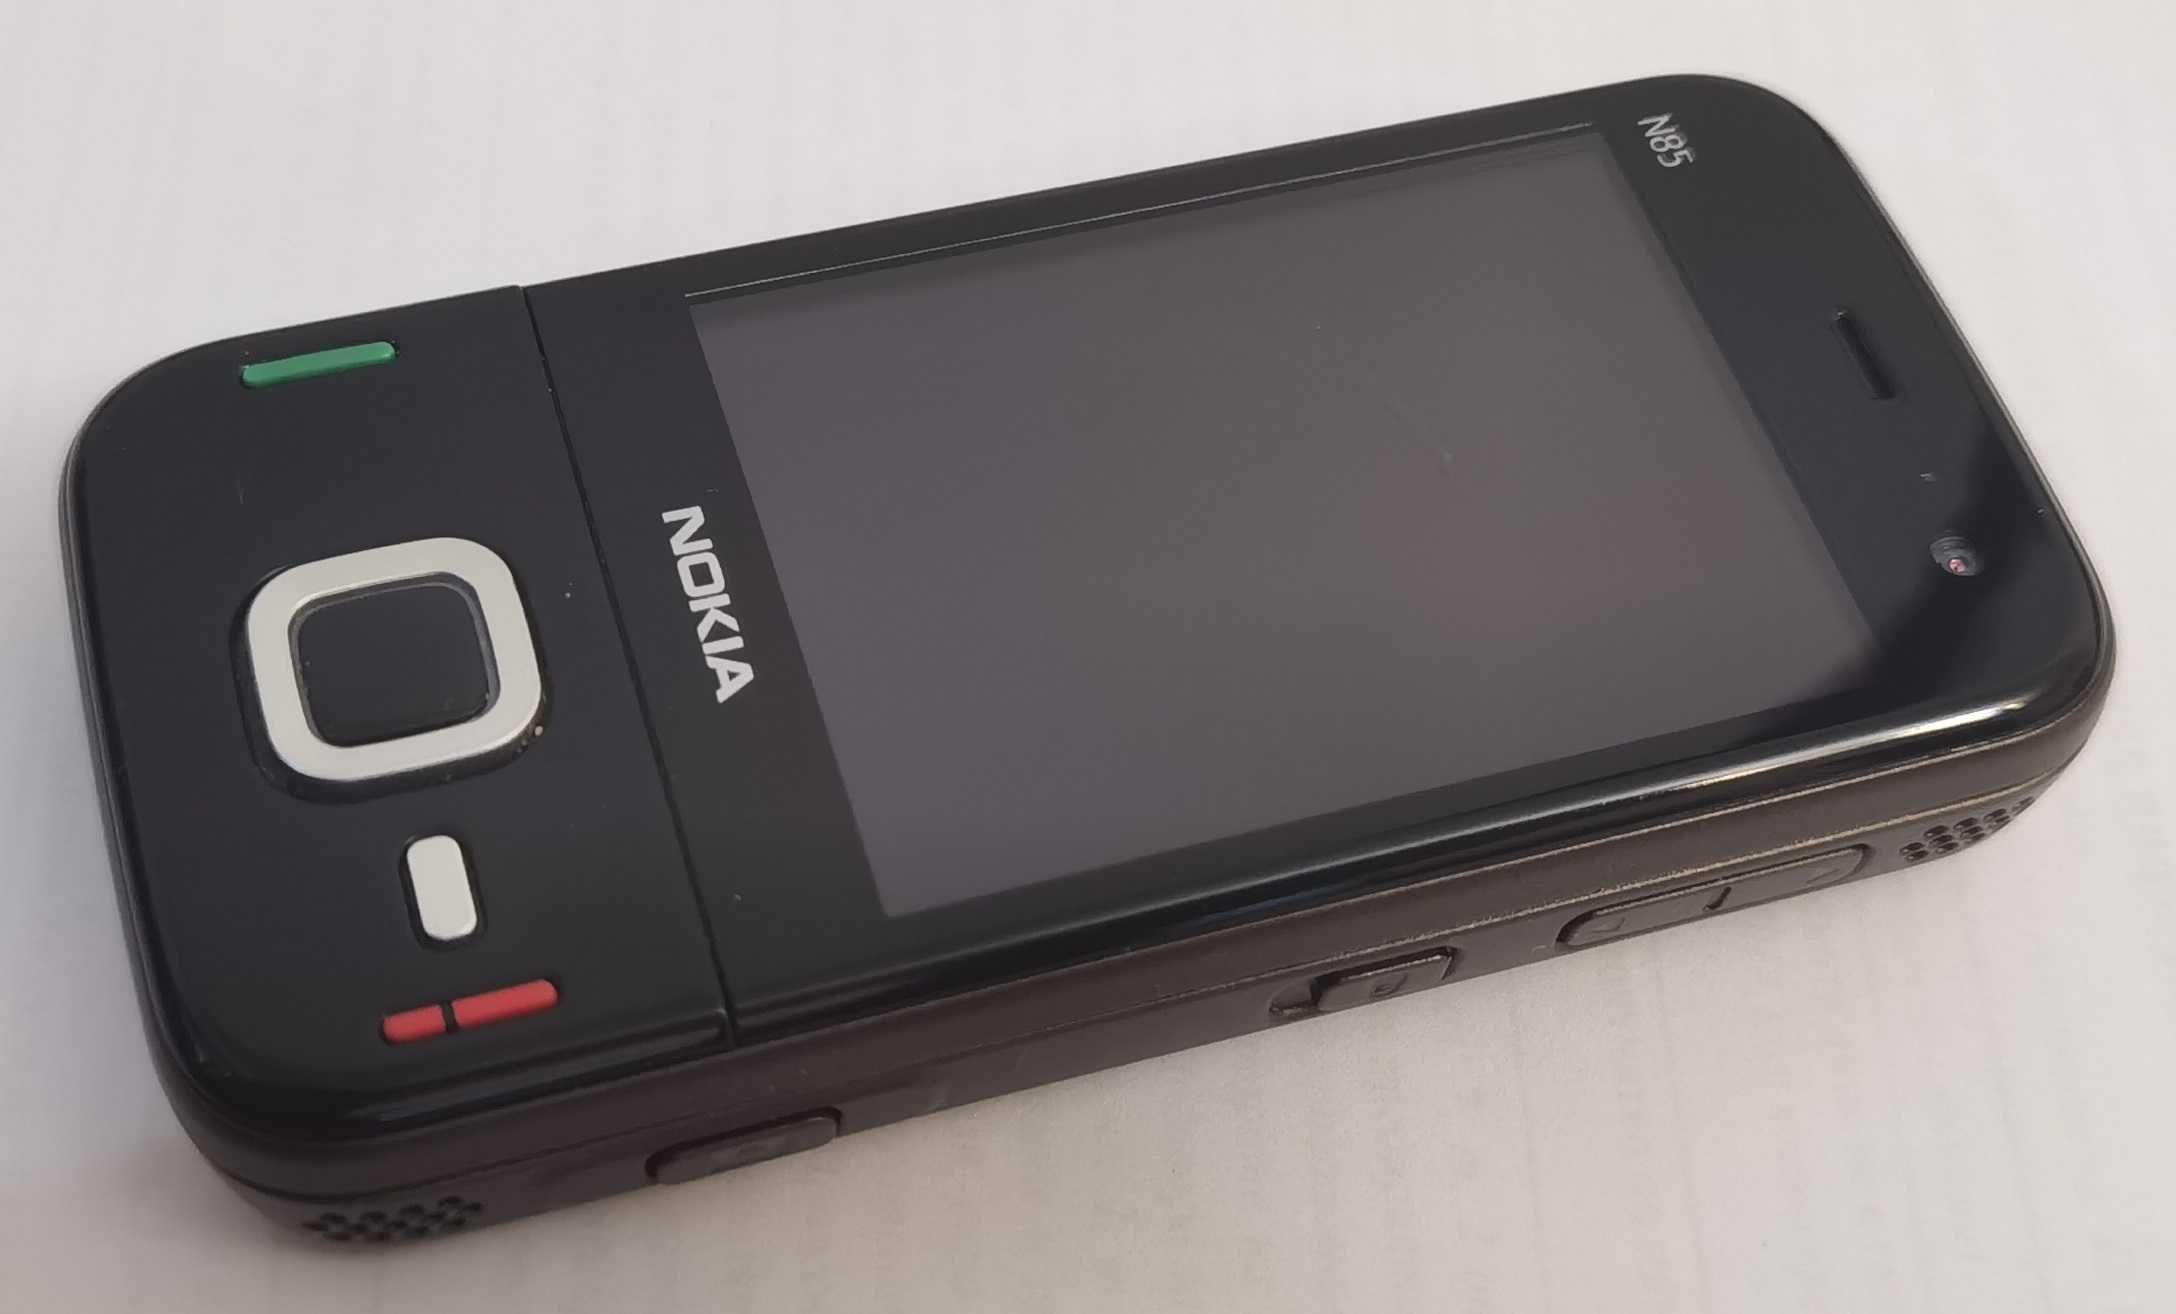 Nokia N85 5.0MP/Wi-Fi/GPS/FM Transmiter Symbian като нов, на 0 минути